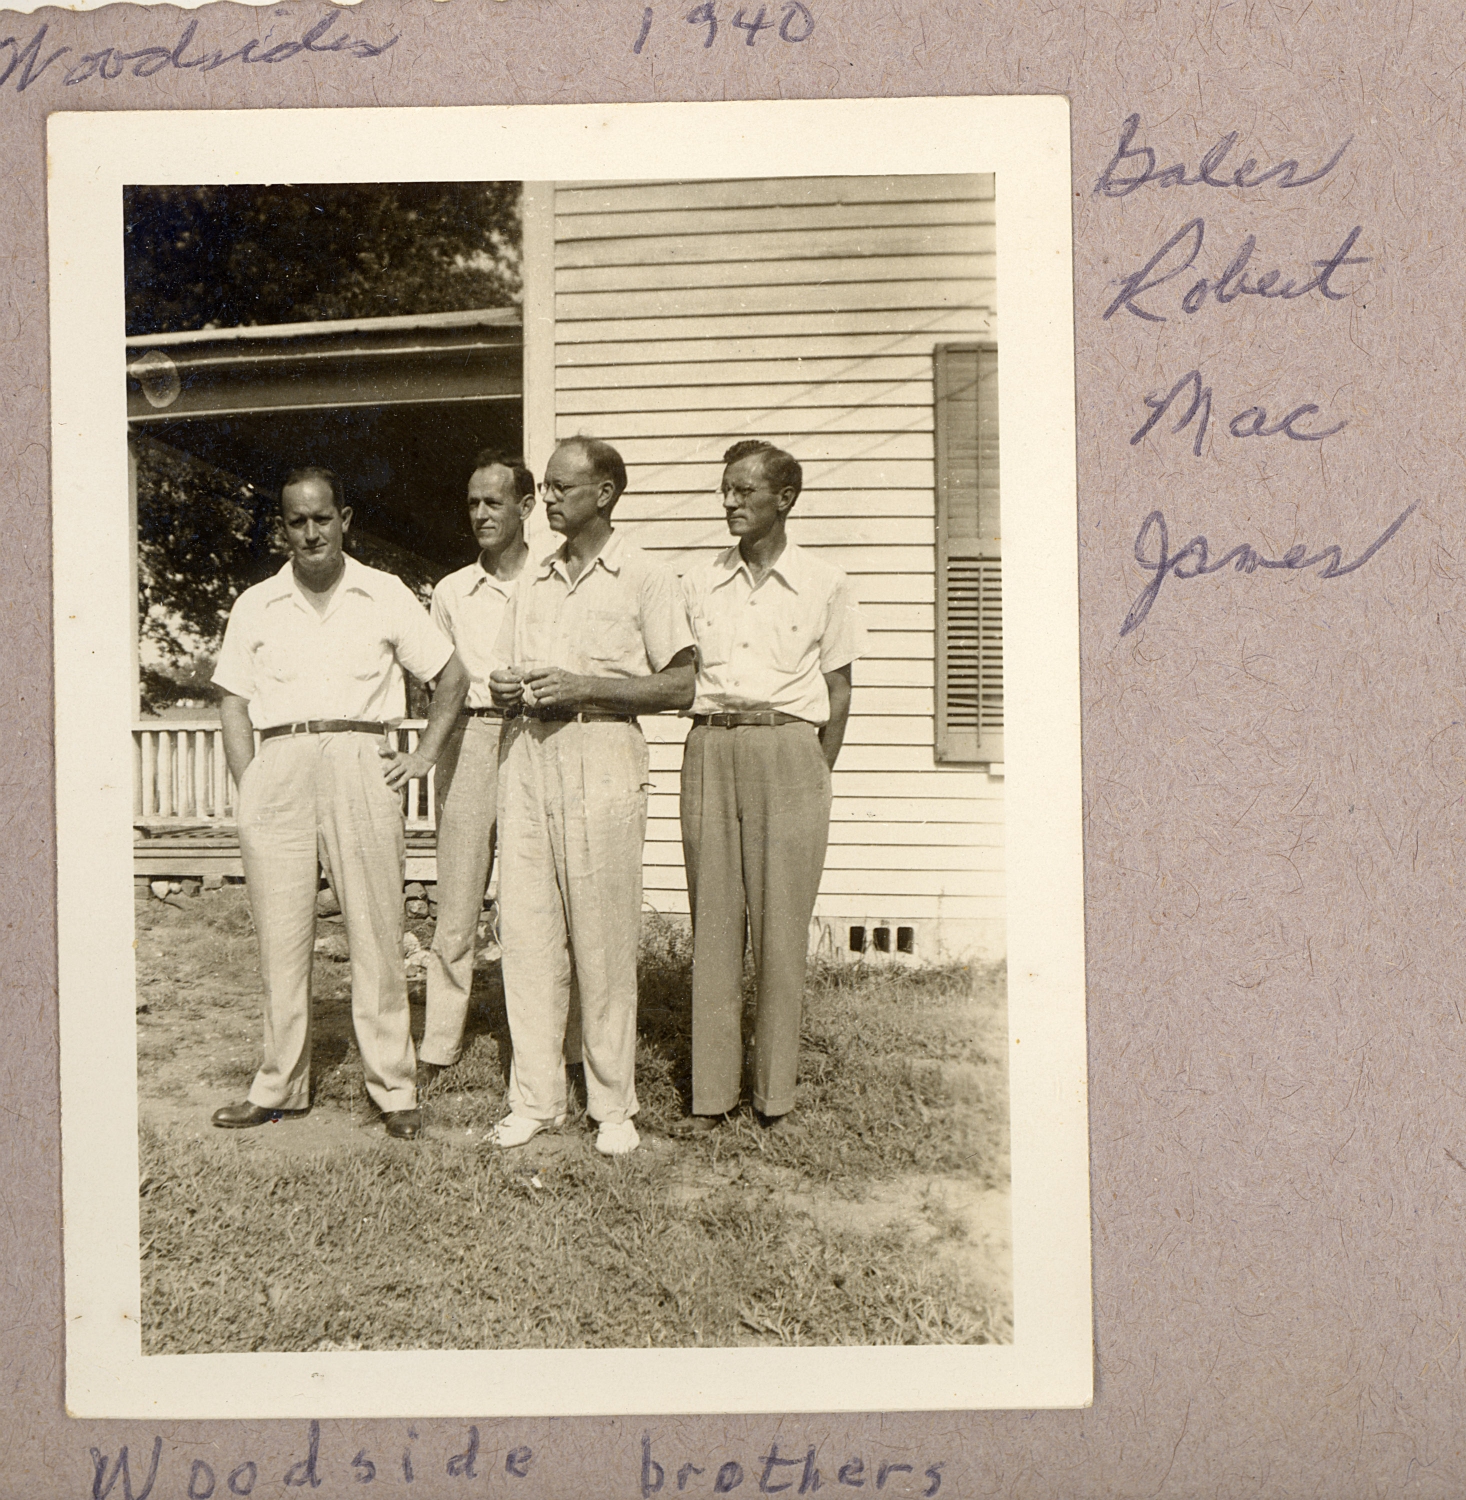 Gales, Robert, Mac, and James in 1940